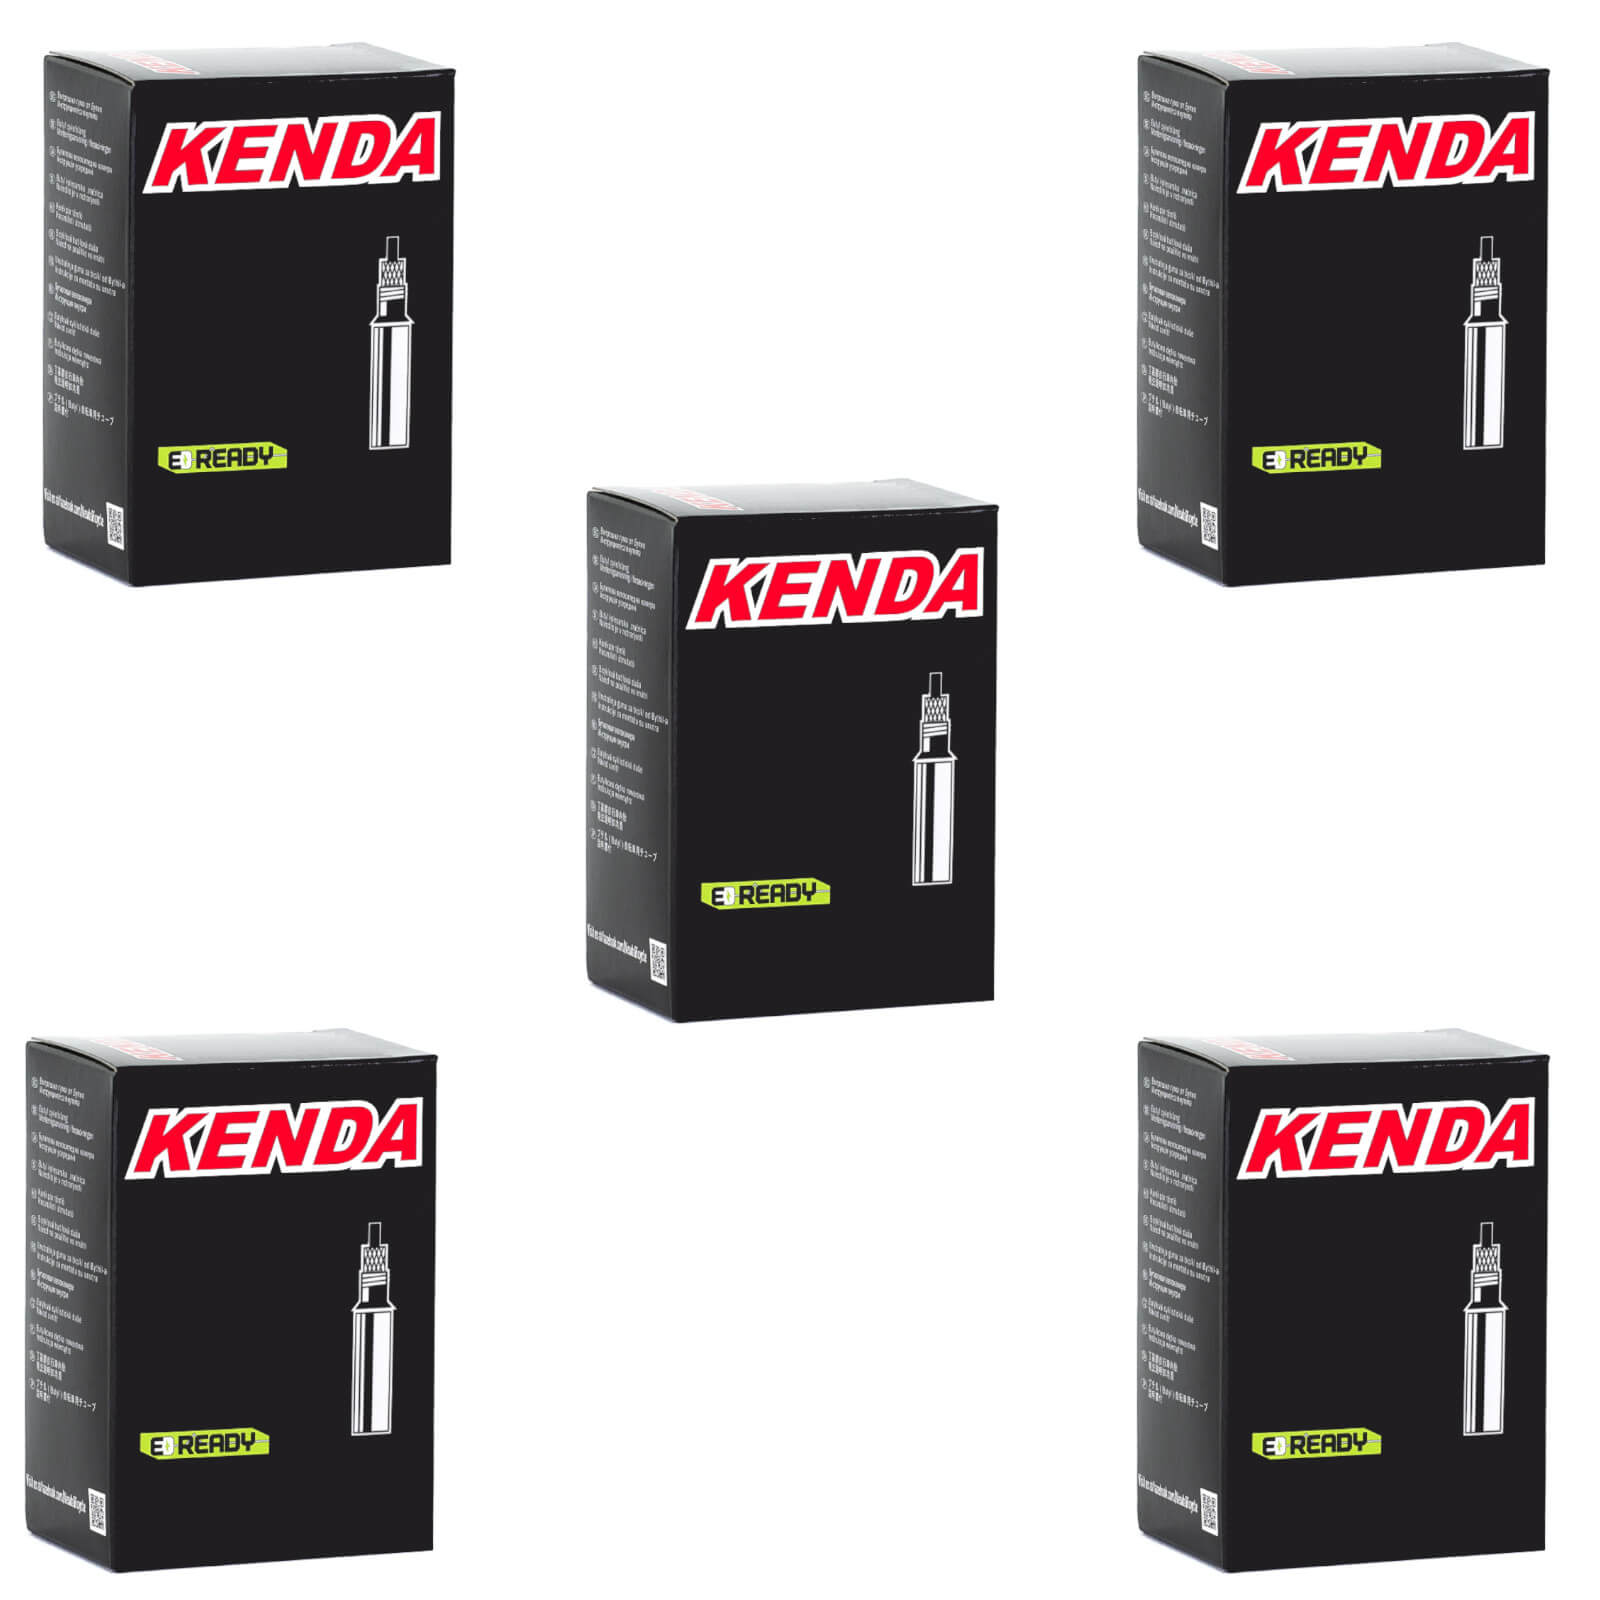 Kenda 26x2.75-3.0" 26 Inch Presta Valve Bike Inner Tube Pack of 5